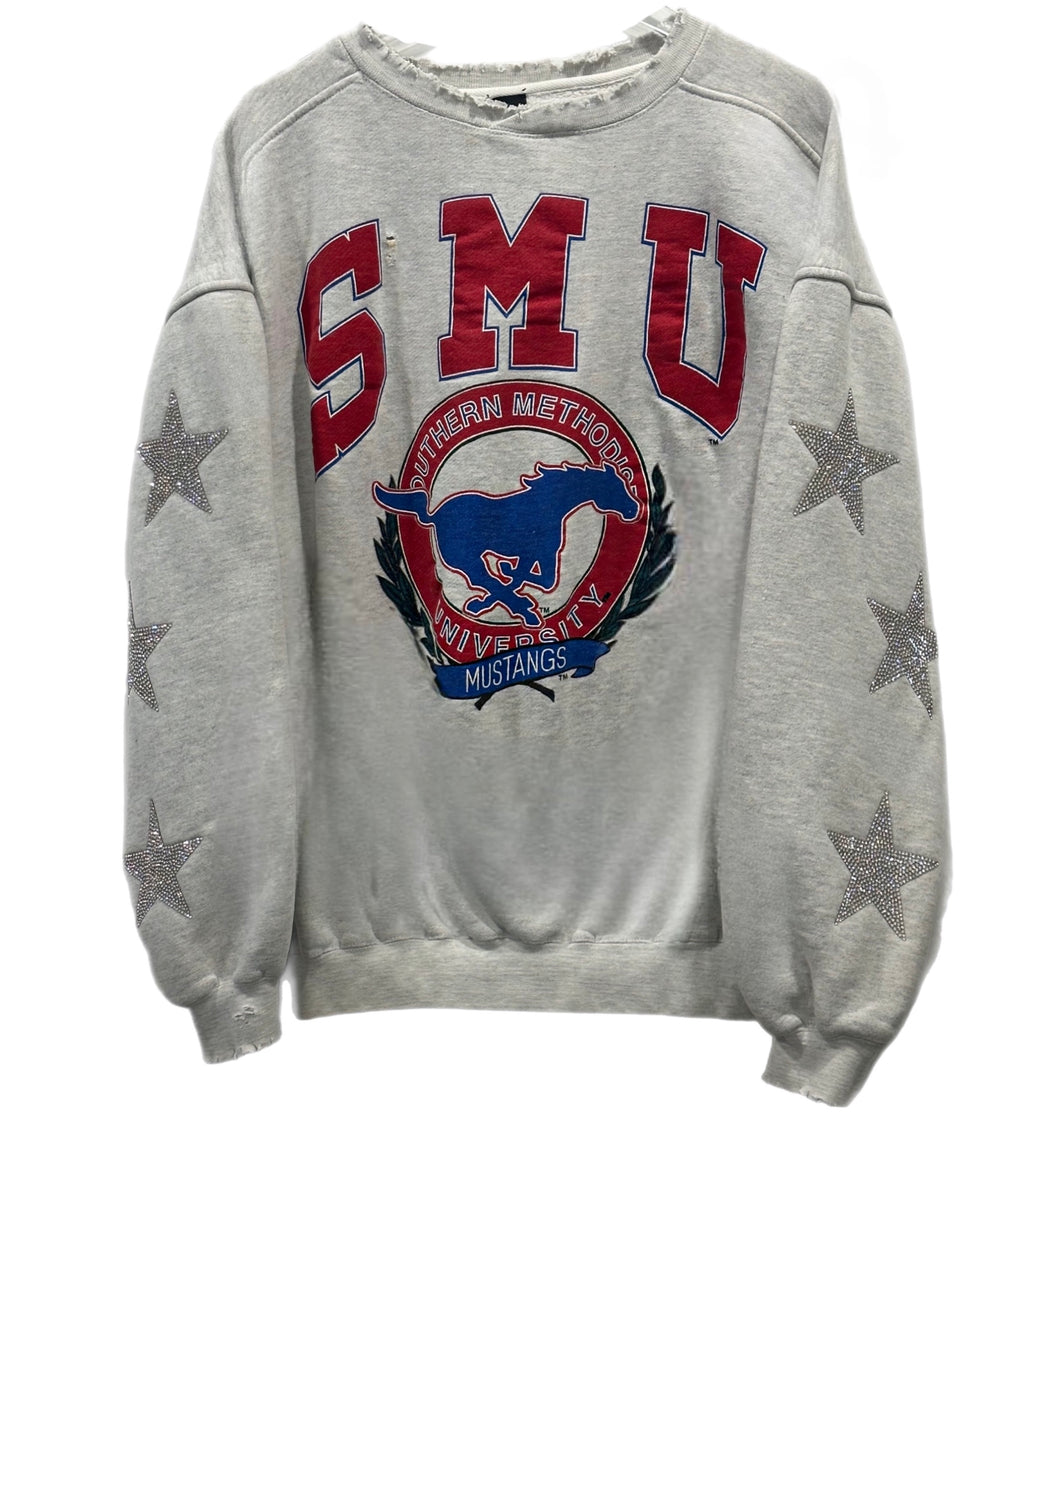 Southern Methodist University, One of a KIND Vintage Frayed SMU Sweatshirt with Three Crystal Star Design